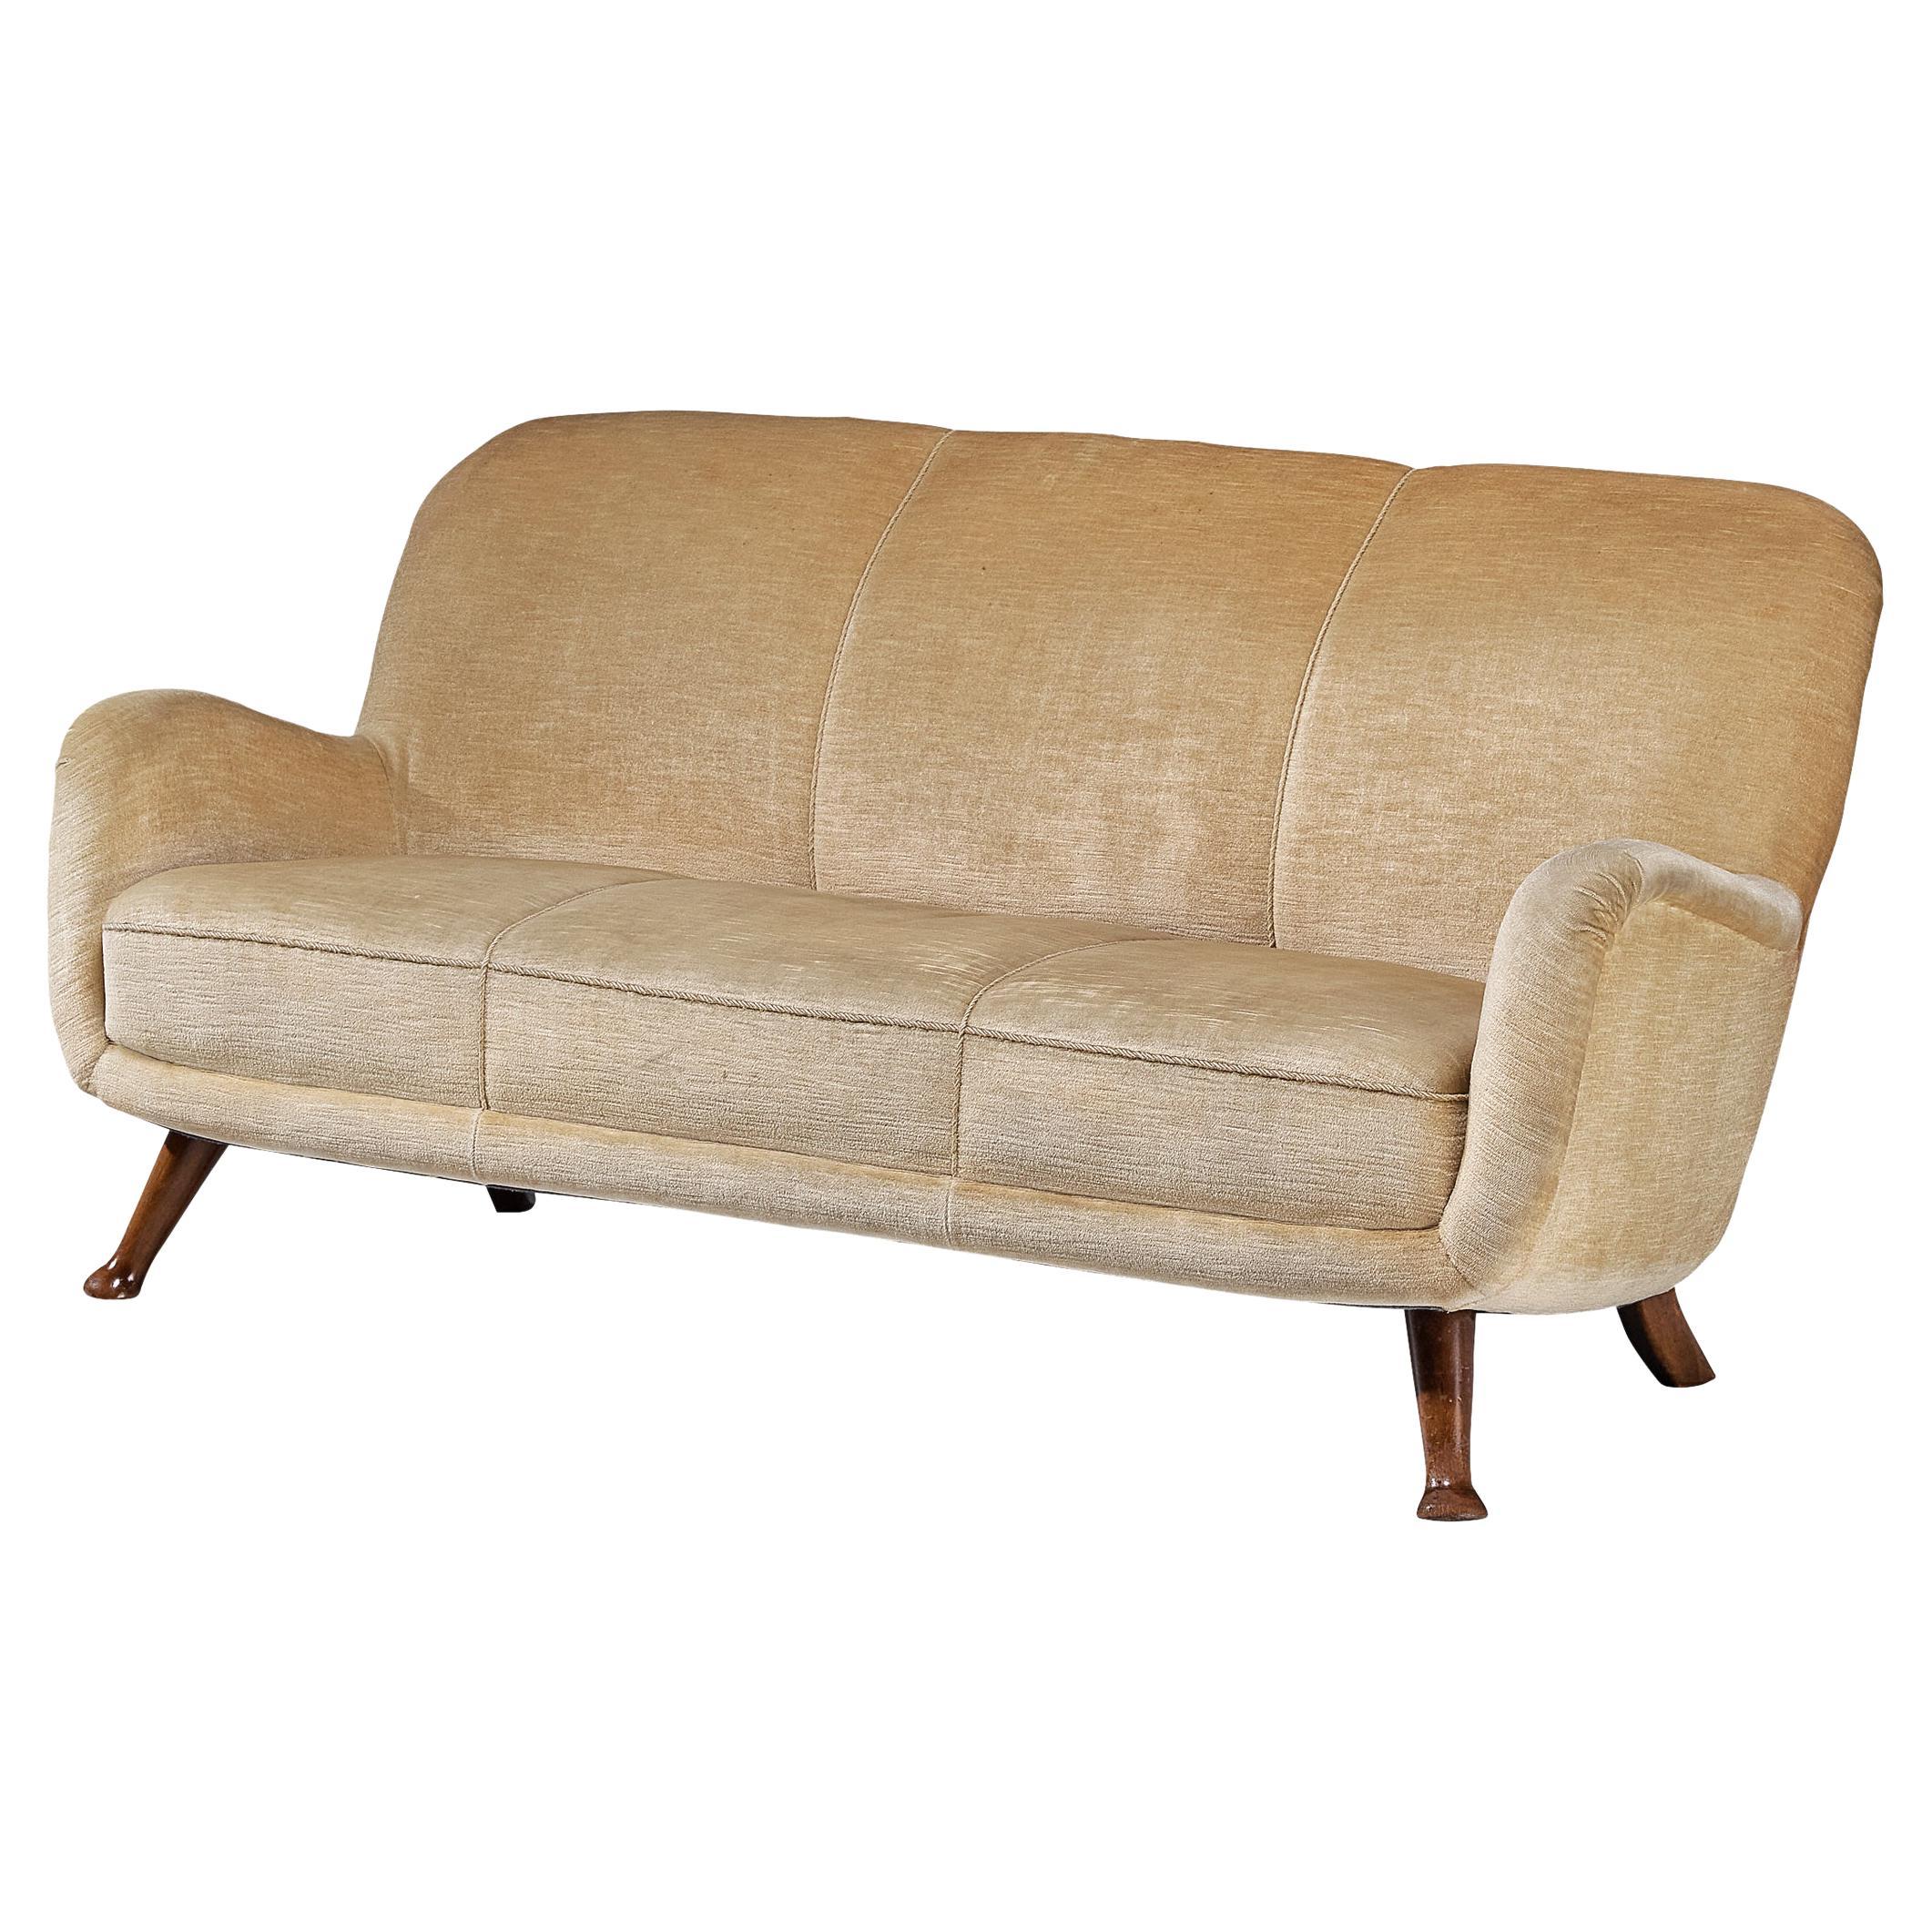 Berga Mobler Sofa in Beige Wool Upholstery 